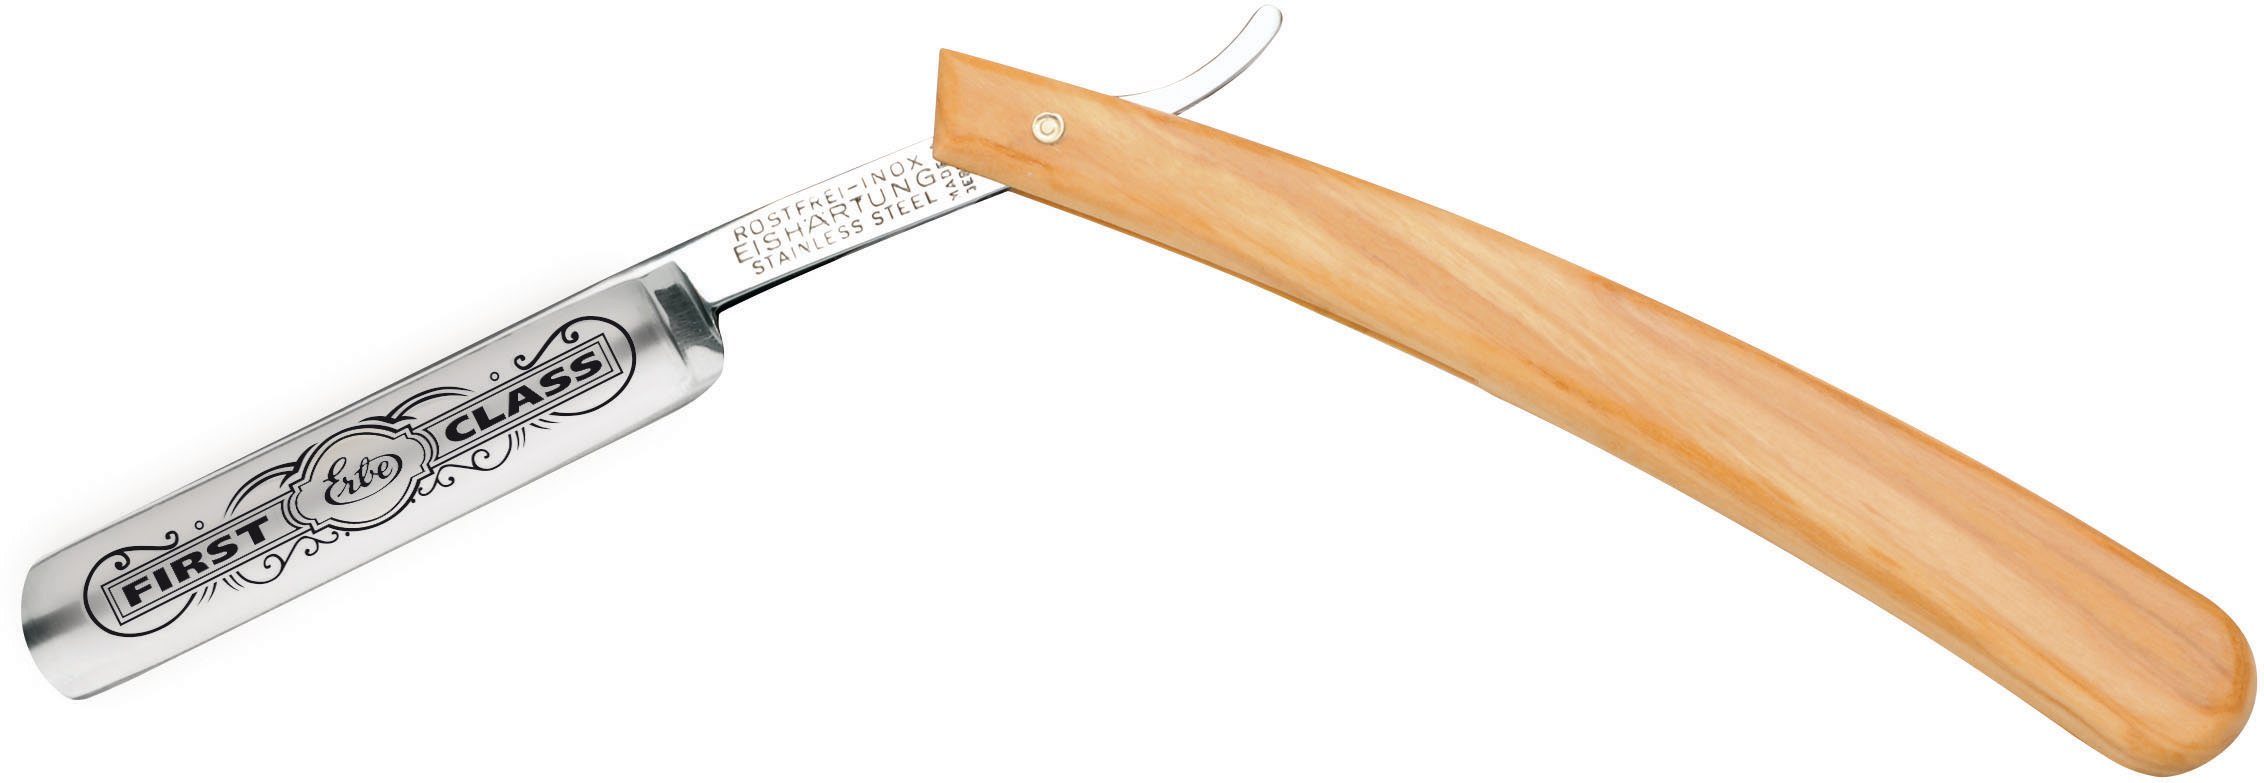 ERBE Rasiermesser mit Olivenholz-Griff Qualitäts-Rasiermesser